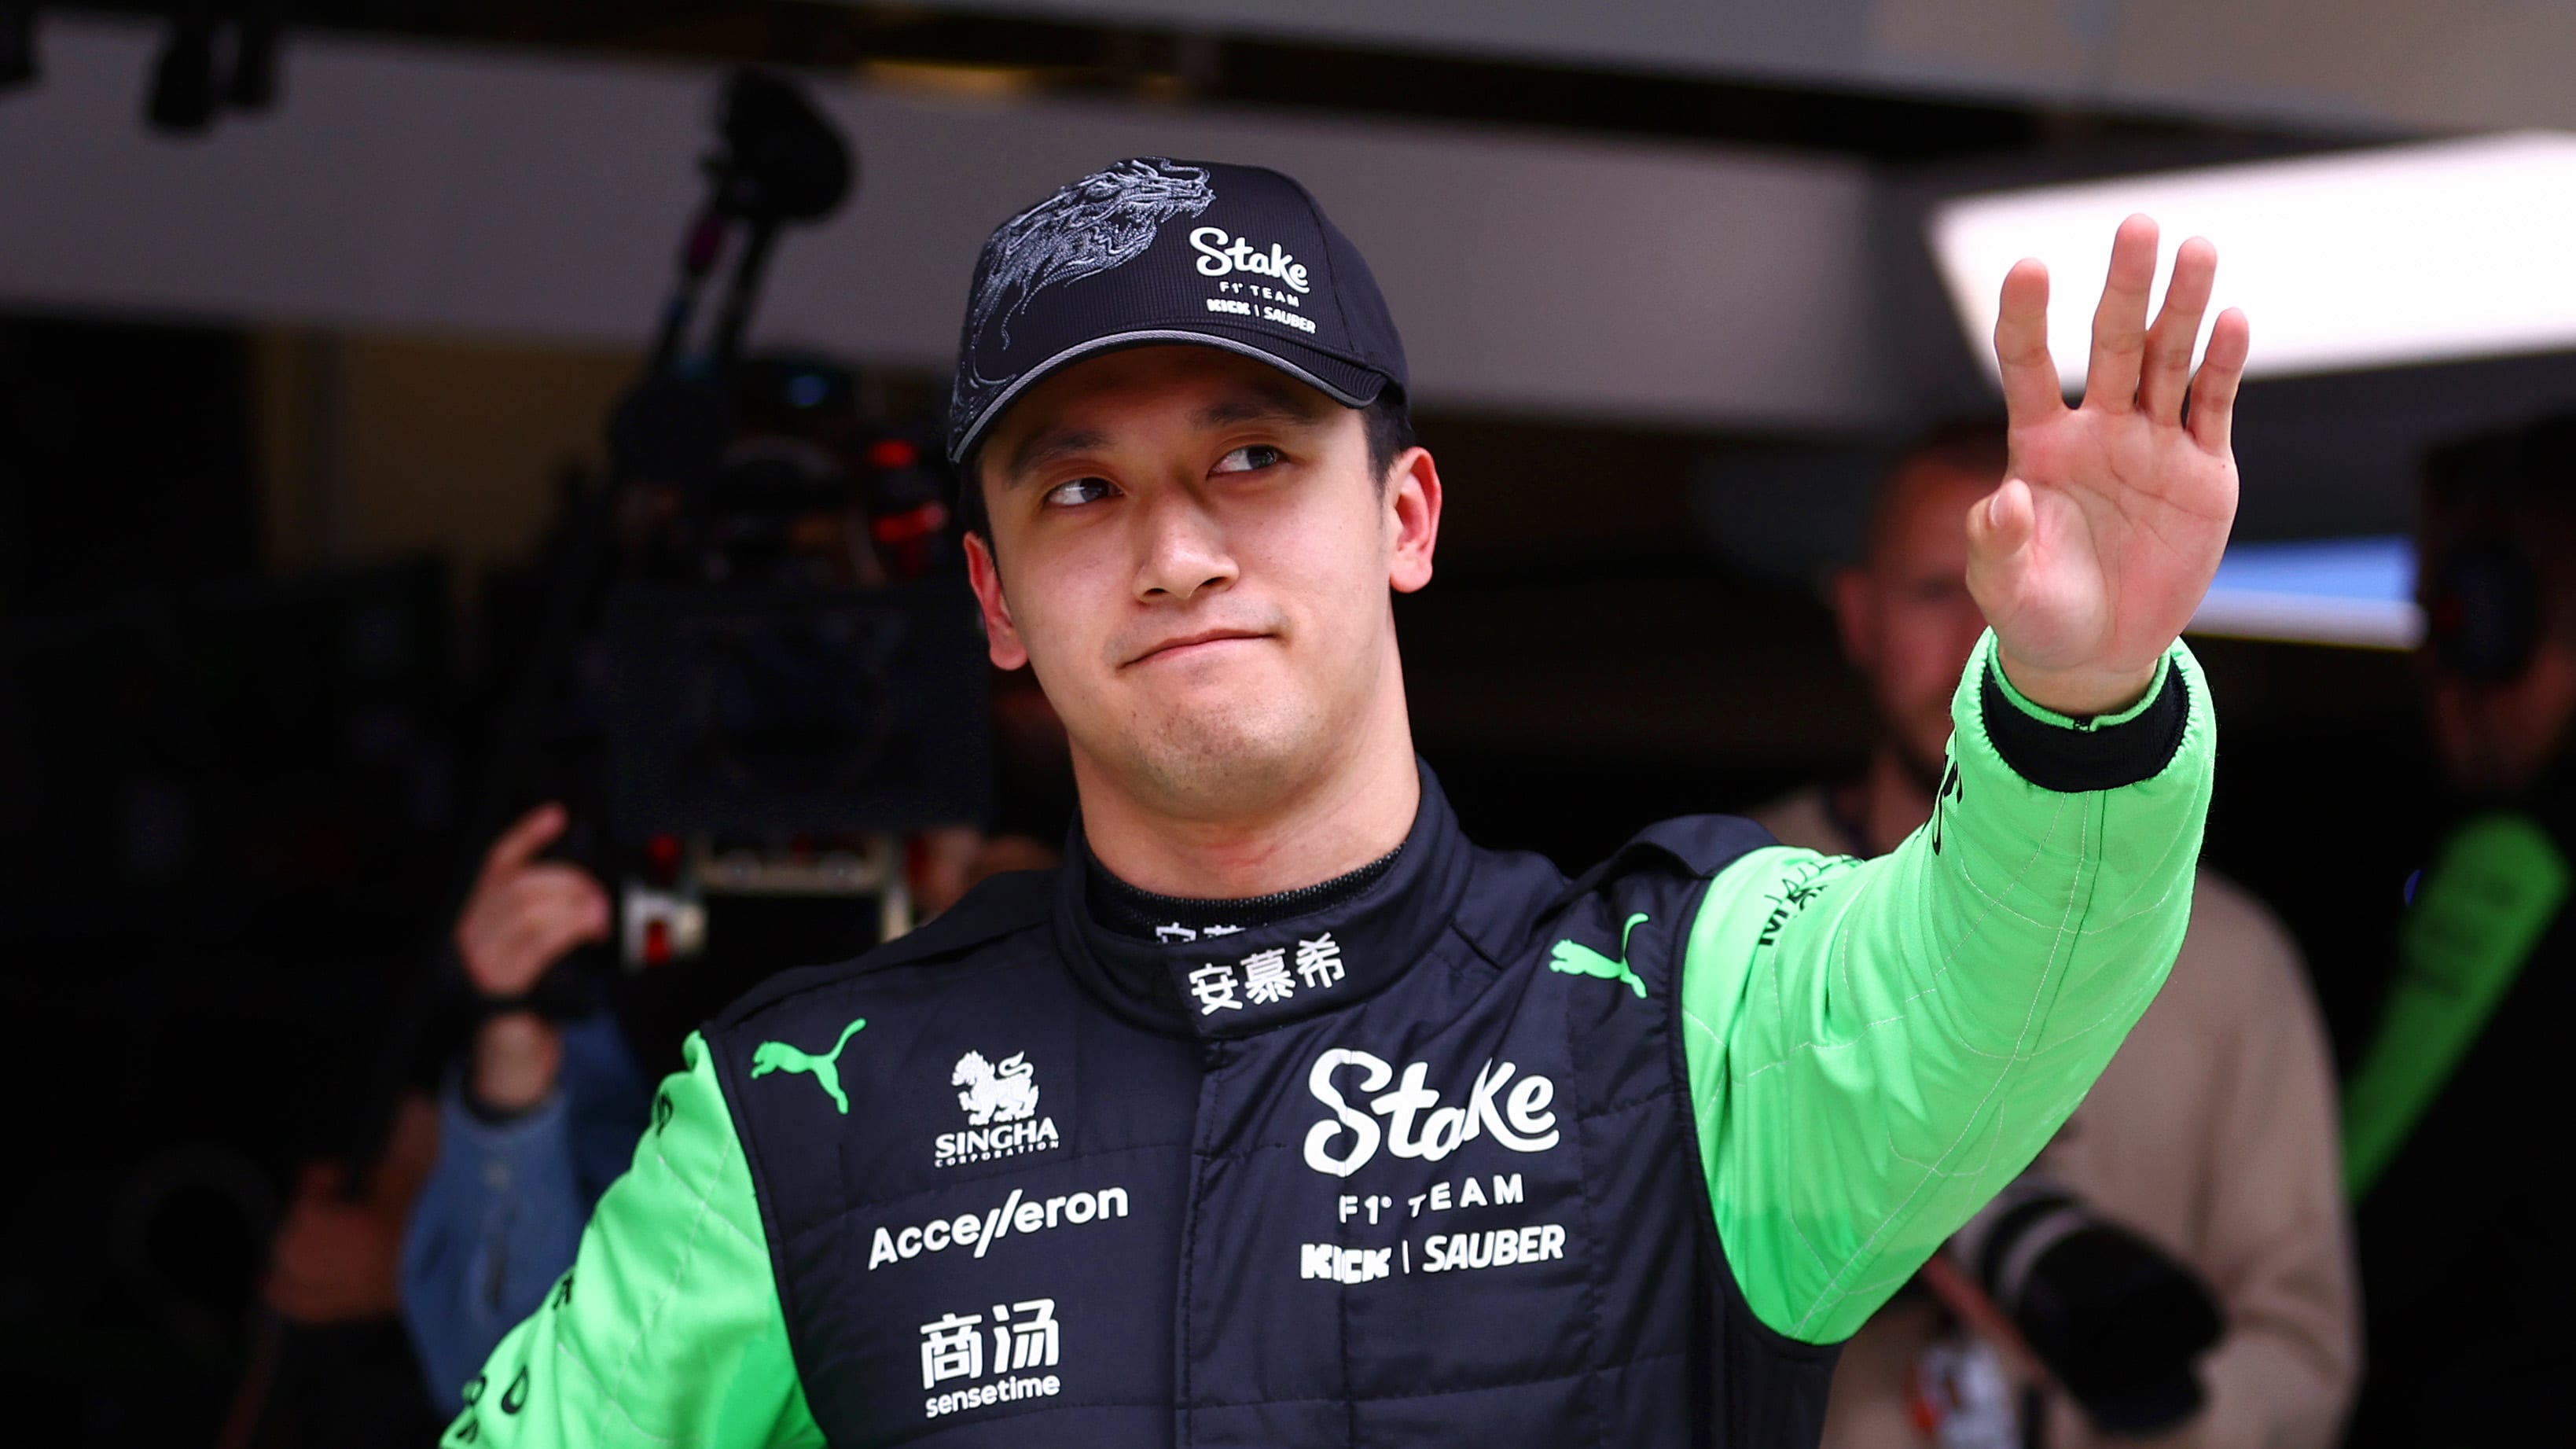 SHANGHAI, CHINA - APRIL 19: Zhou Guanyu of China and Stake F1 Team Kick Sauber waves to fans ahead